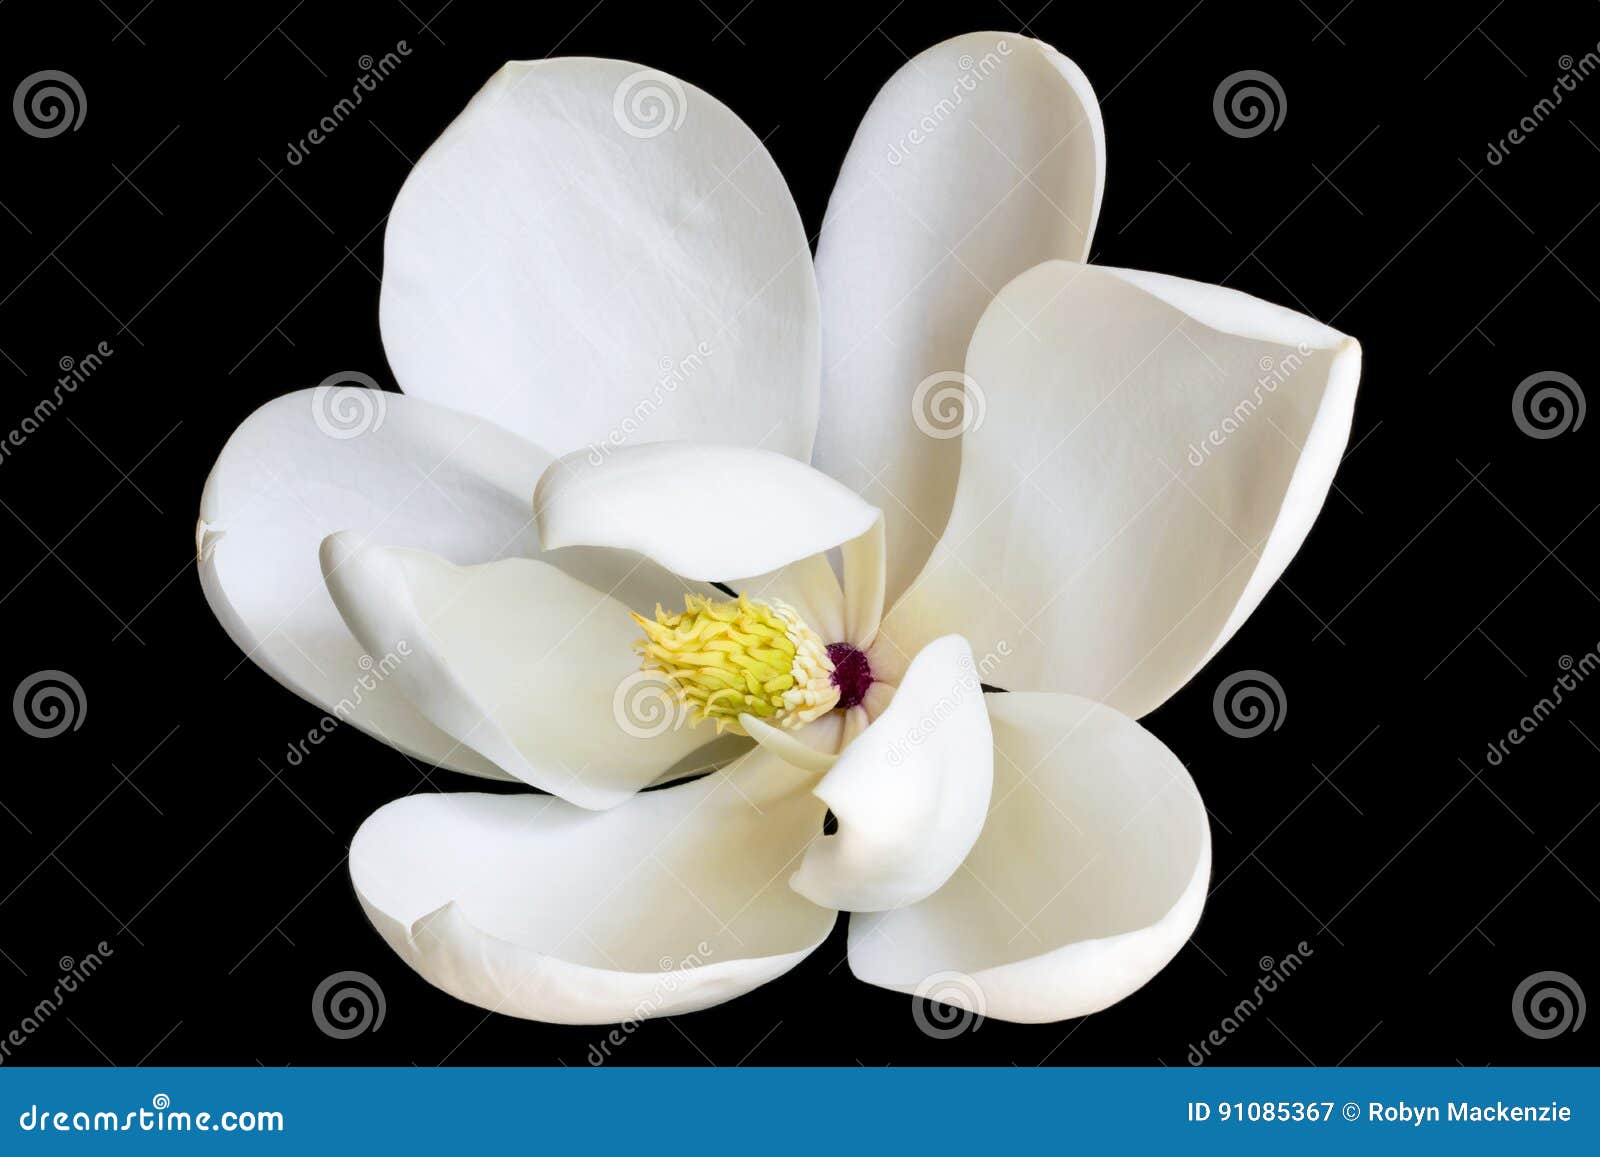 white magnolia flower  on black